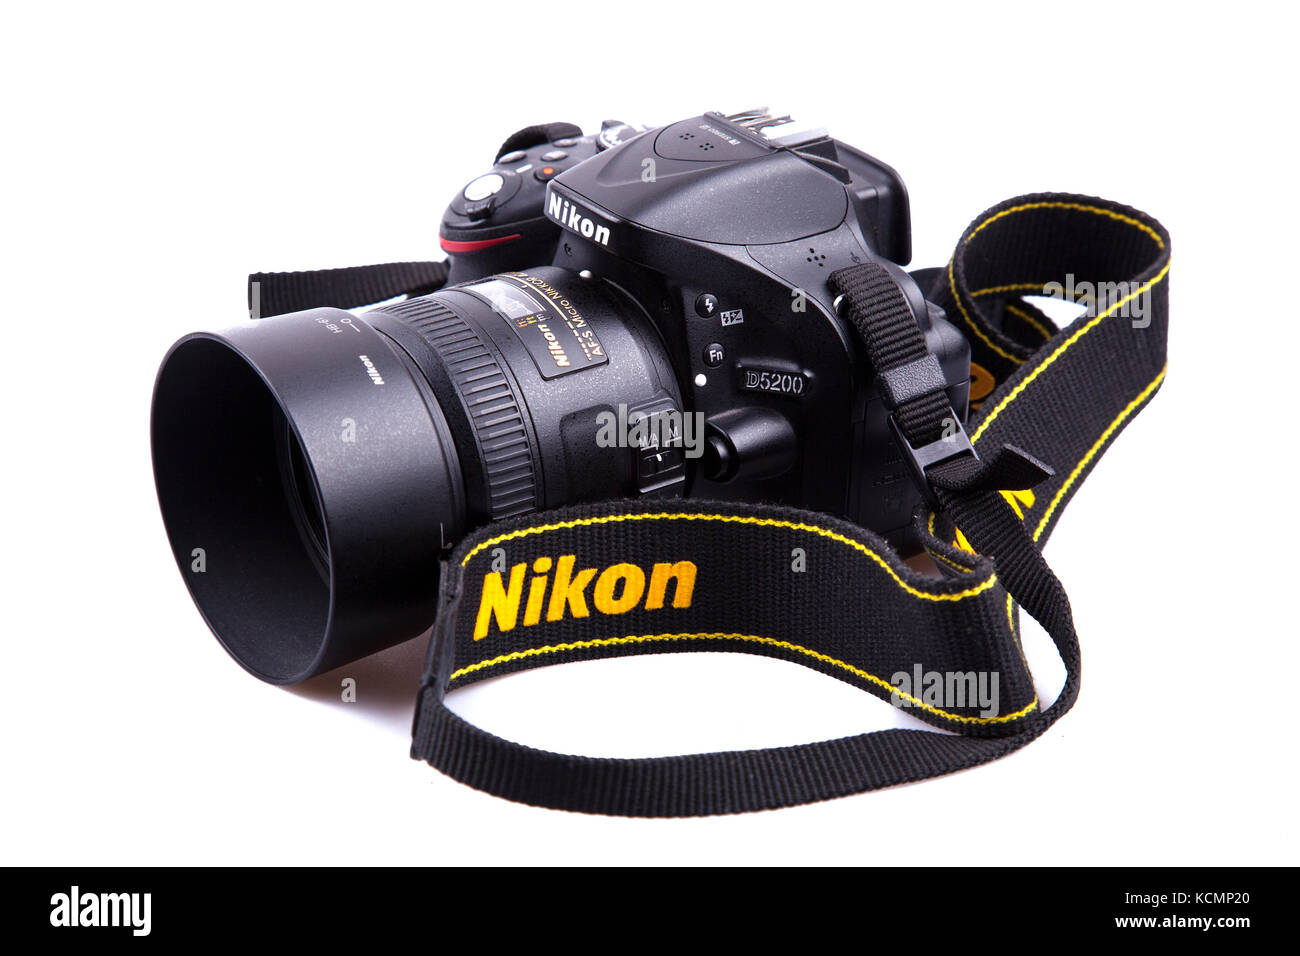 Nikon d5200 fotografías e imágenes de alta resolución - Alamy